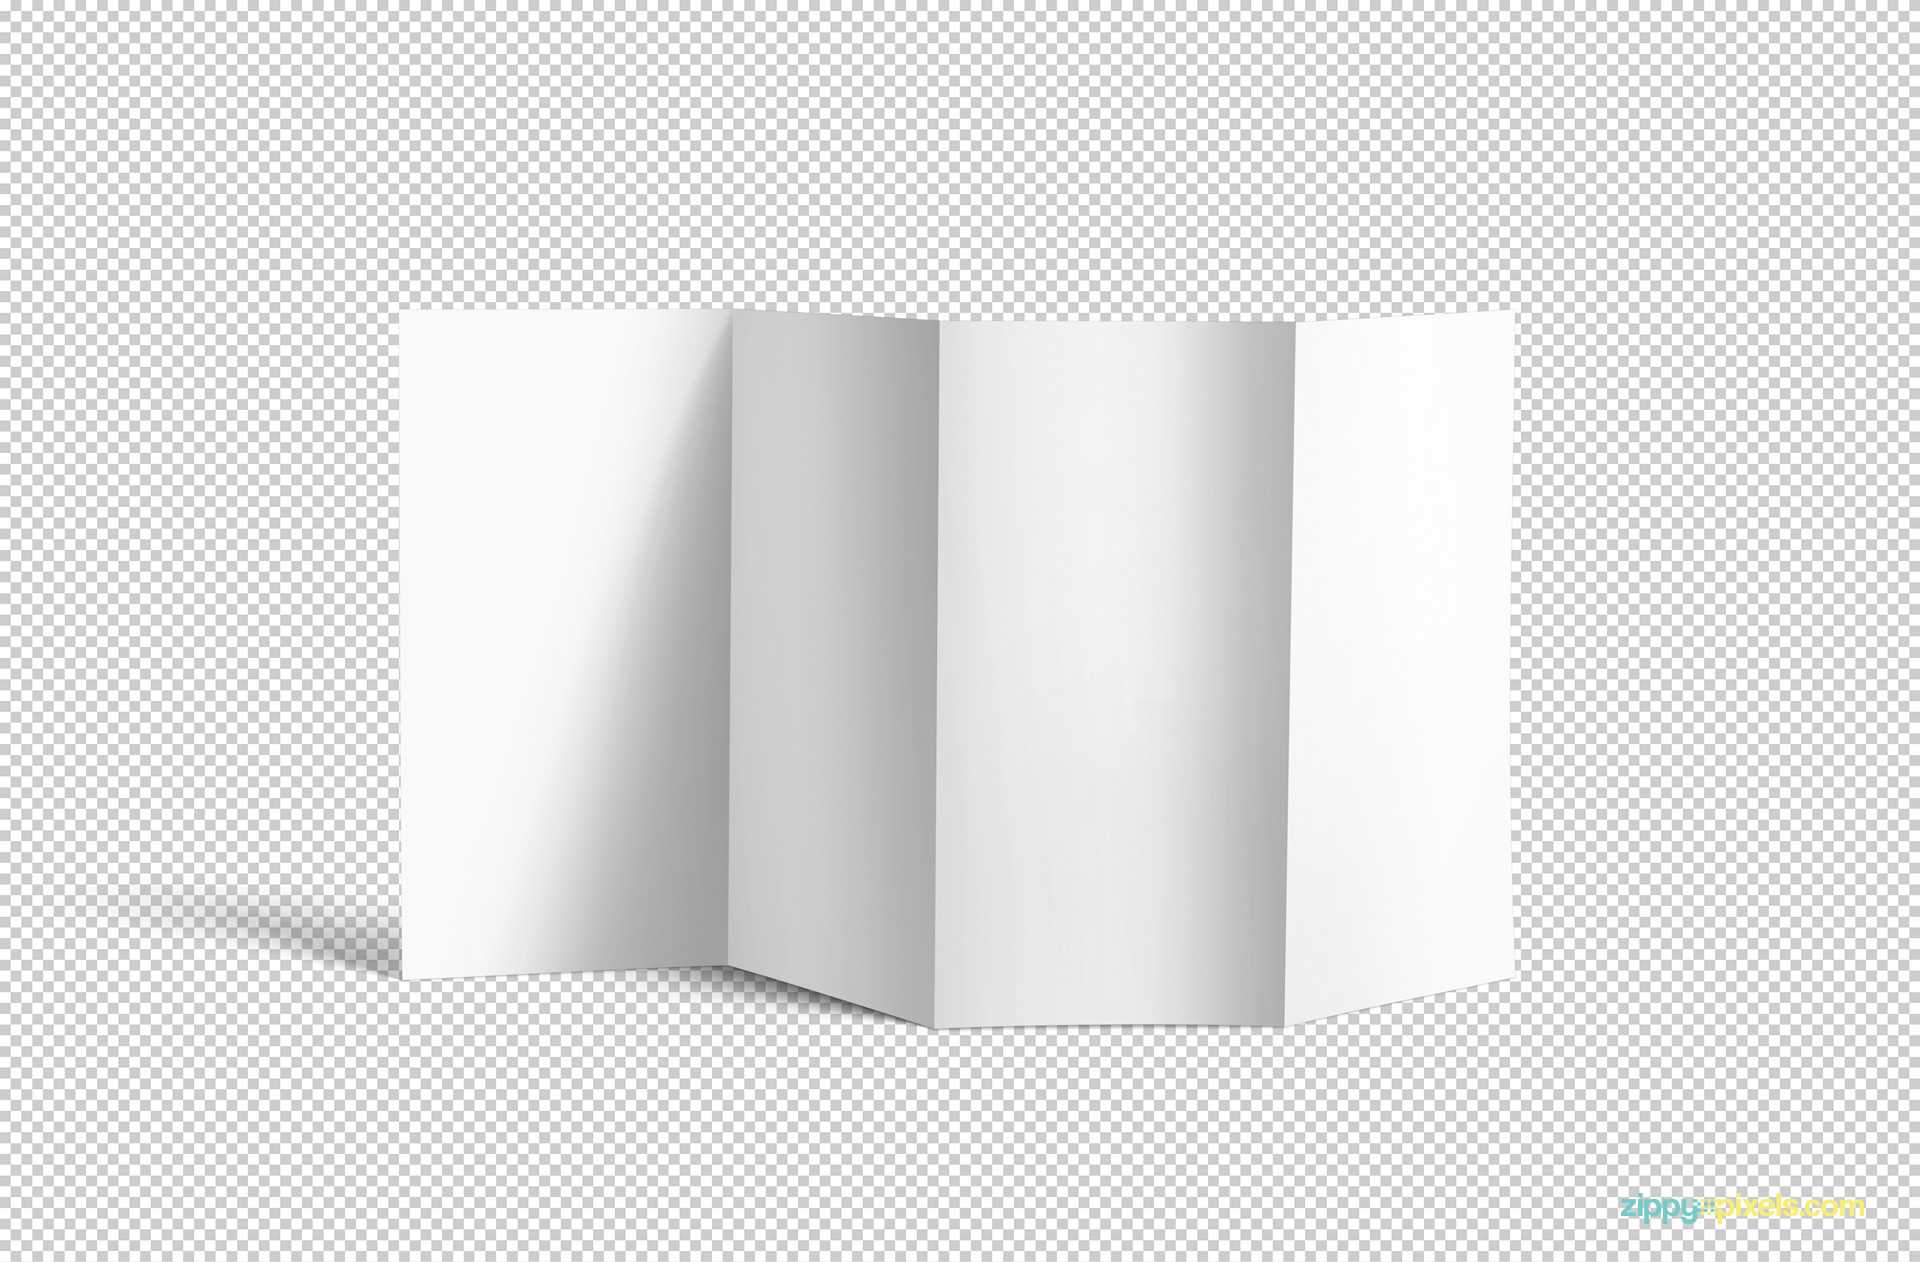 free-4-fold-brochure-mockup-zippypixels-for-4-fold-brochure-template